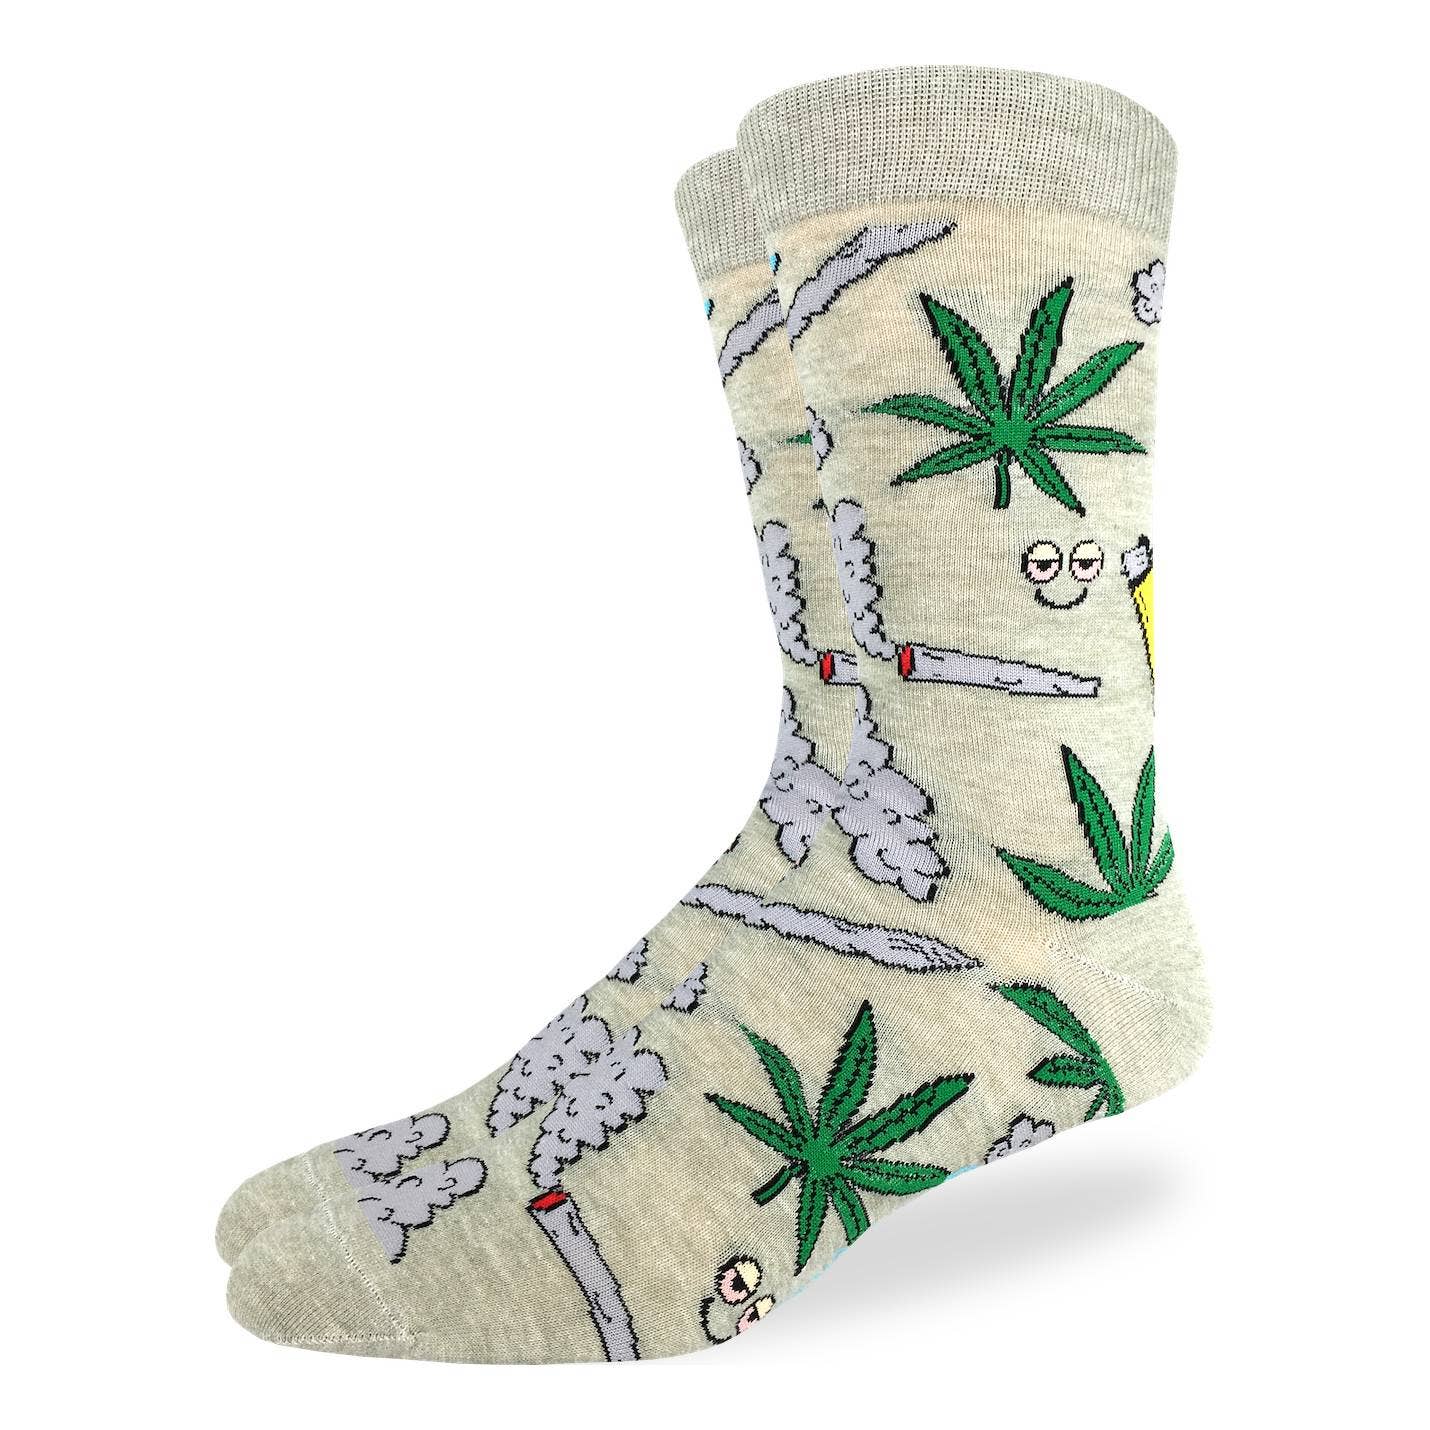 Good Luck Sock - Men's Stoned Marijuana Socks